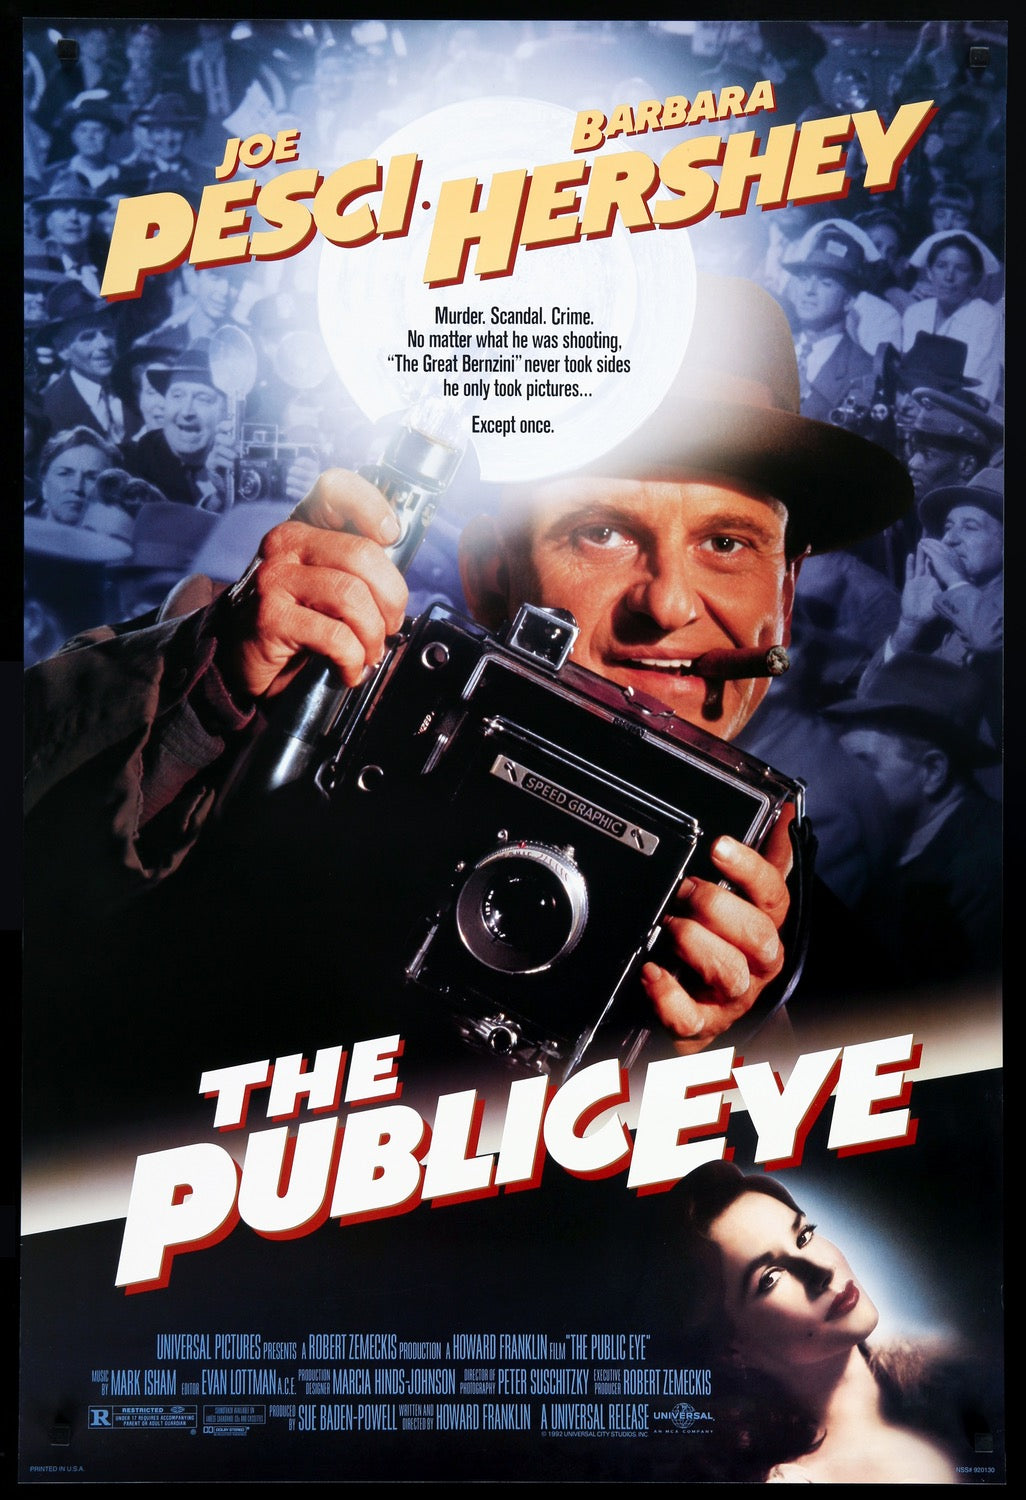 Public Eye (1992) original movie poster for sale at Original Film Art